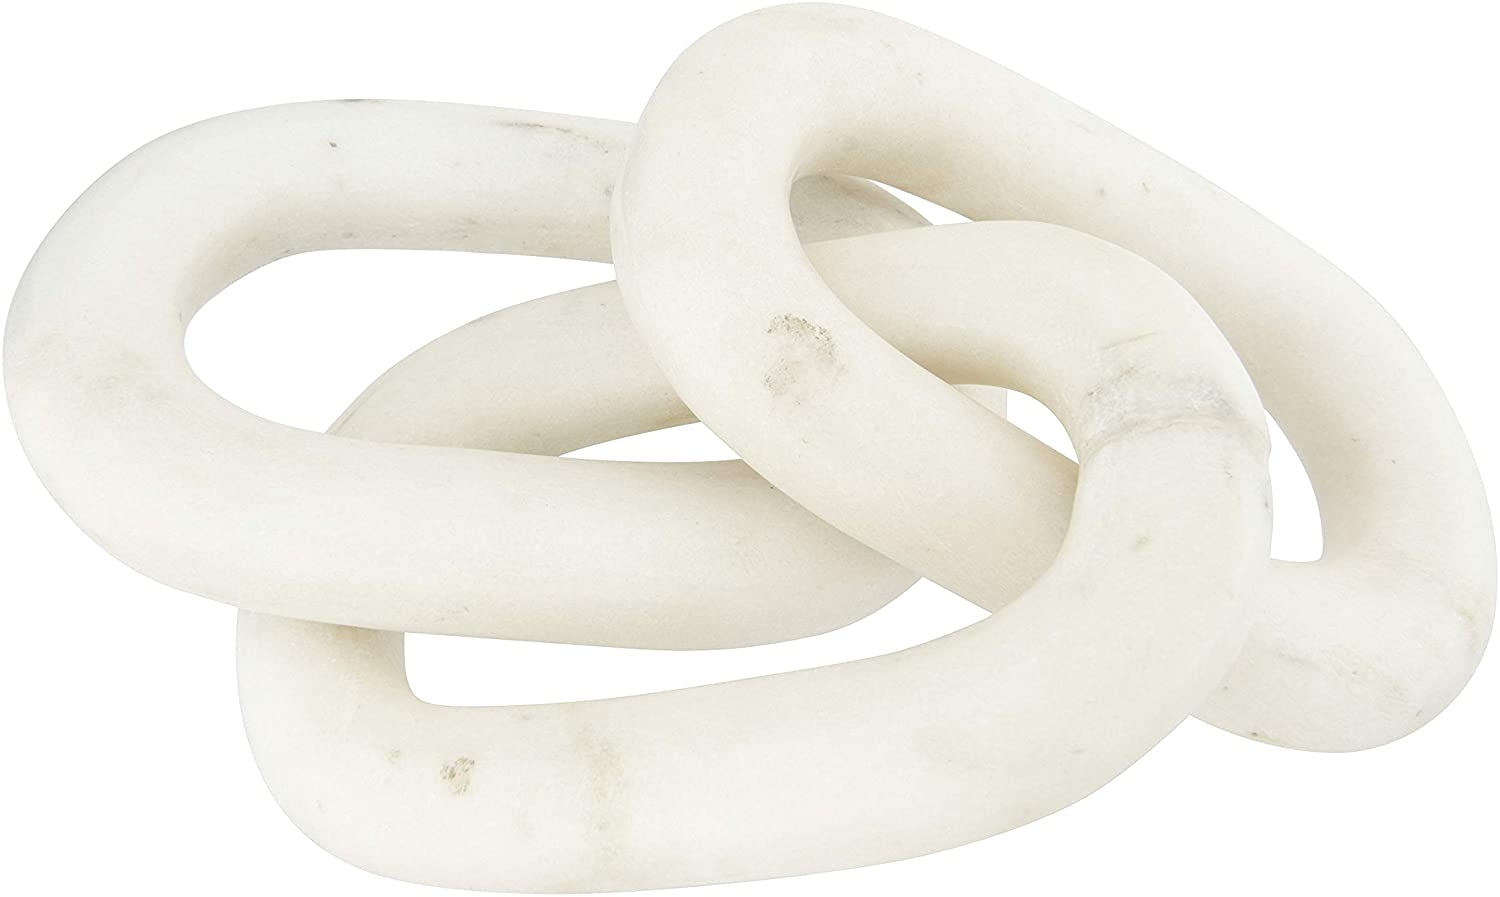 Marble Chain Figure, White - Image 2